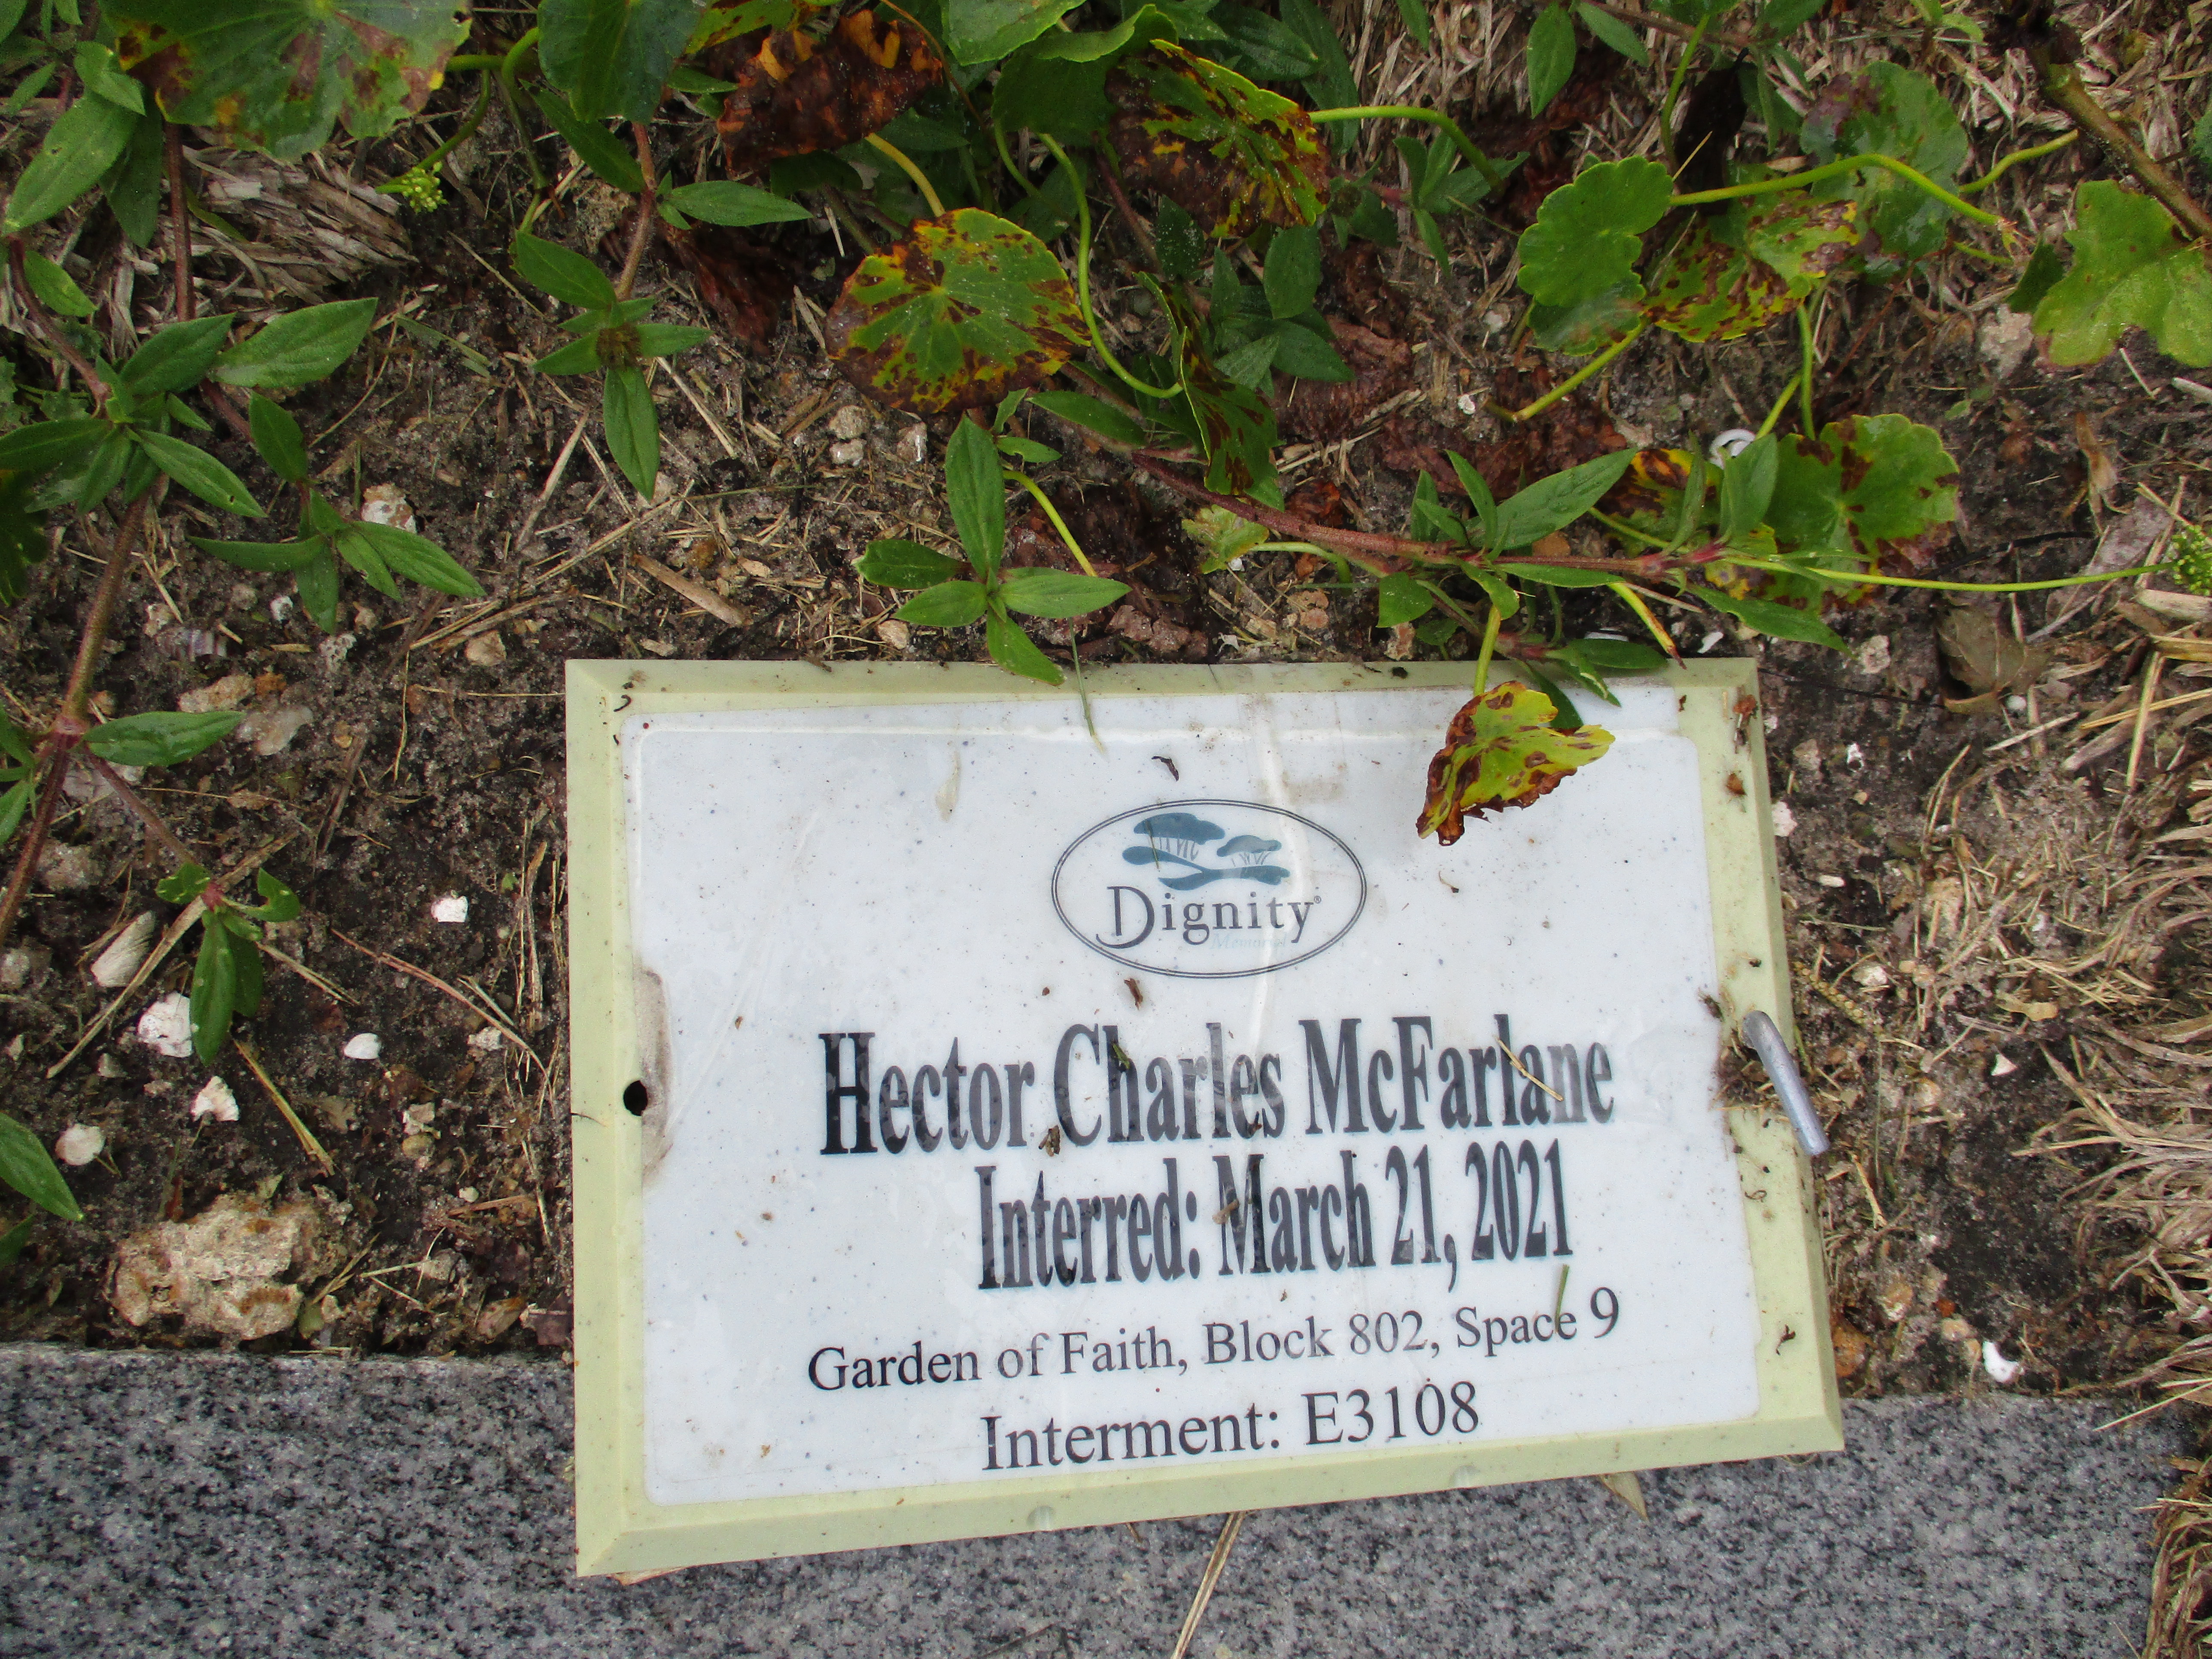 Hector Charles McFarlane